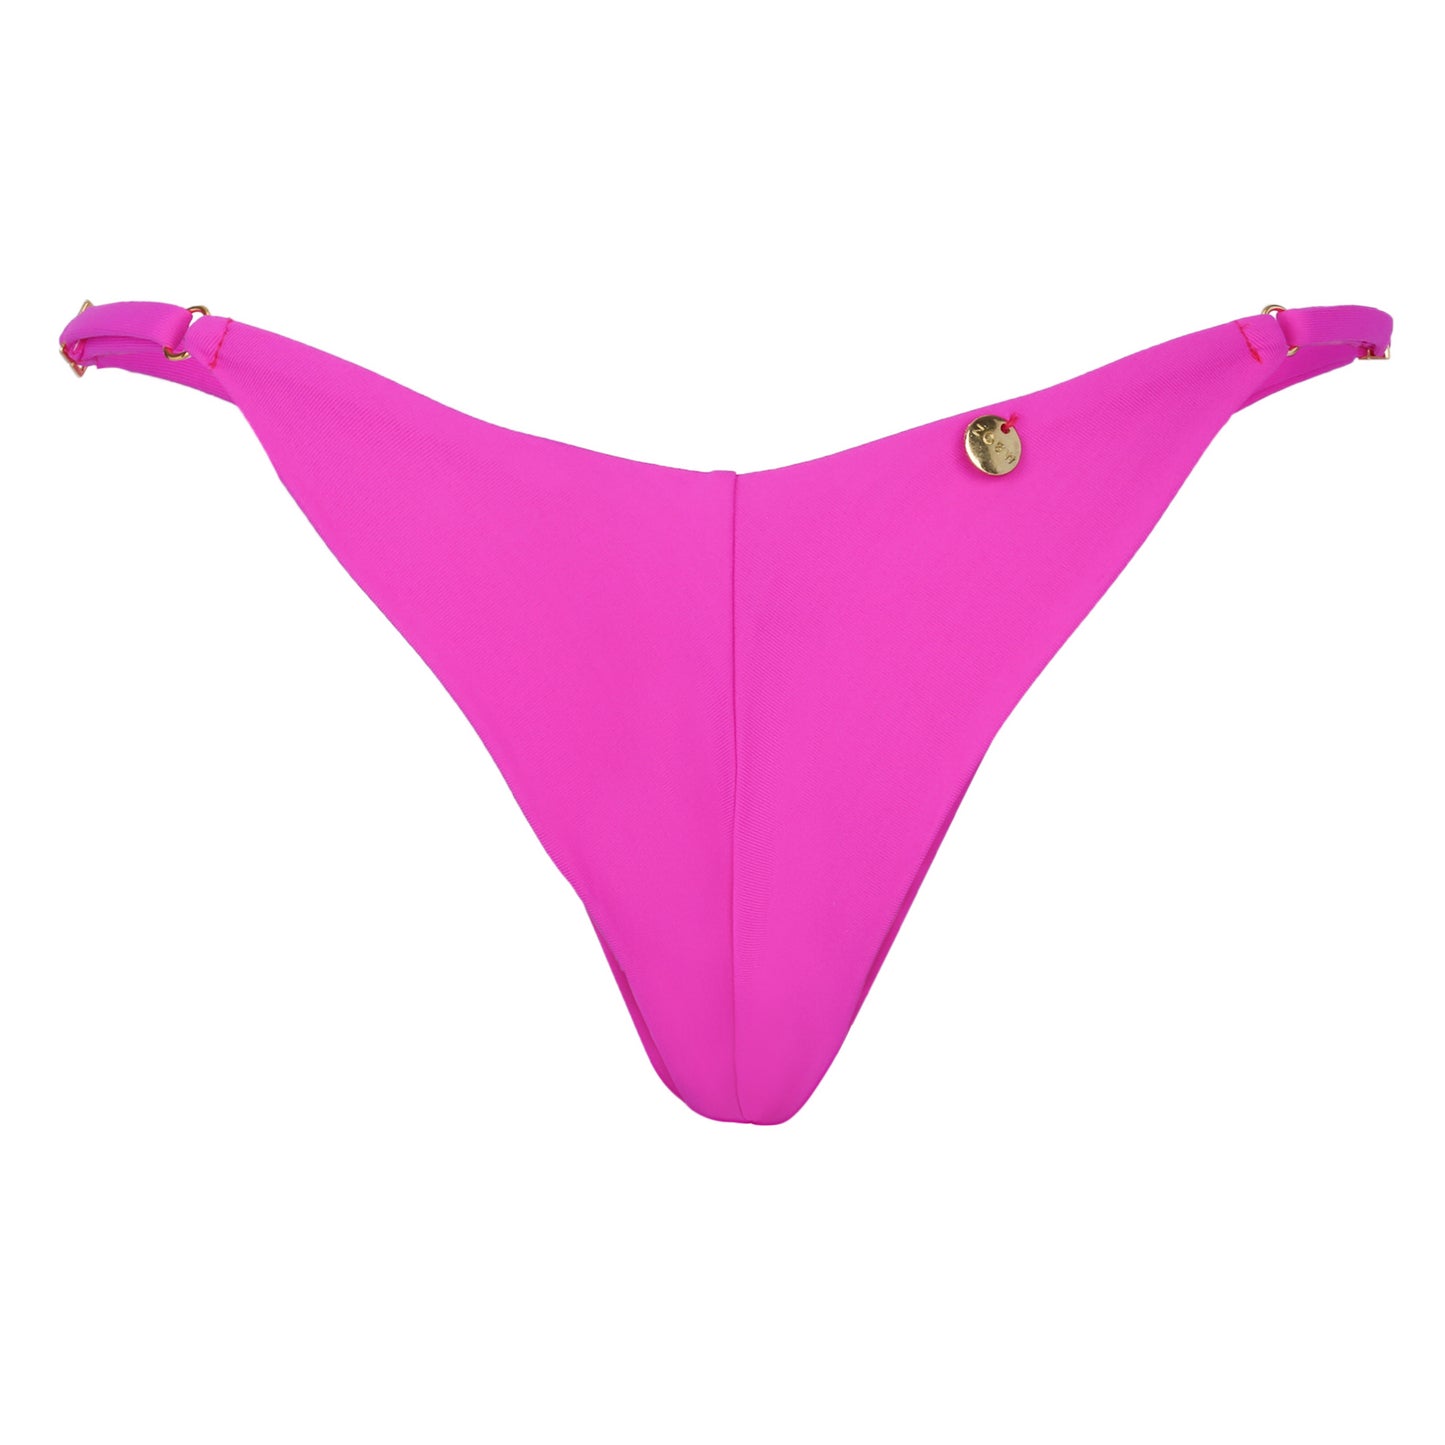 Bliss Bikini Bottom in Pink